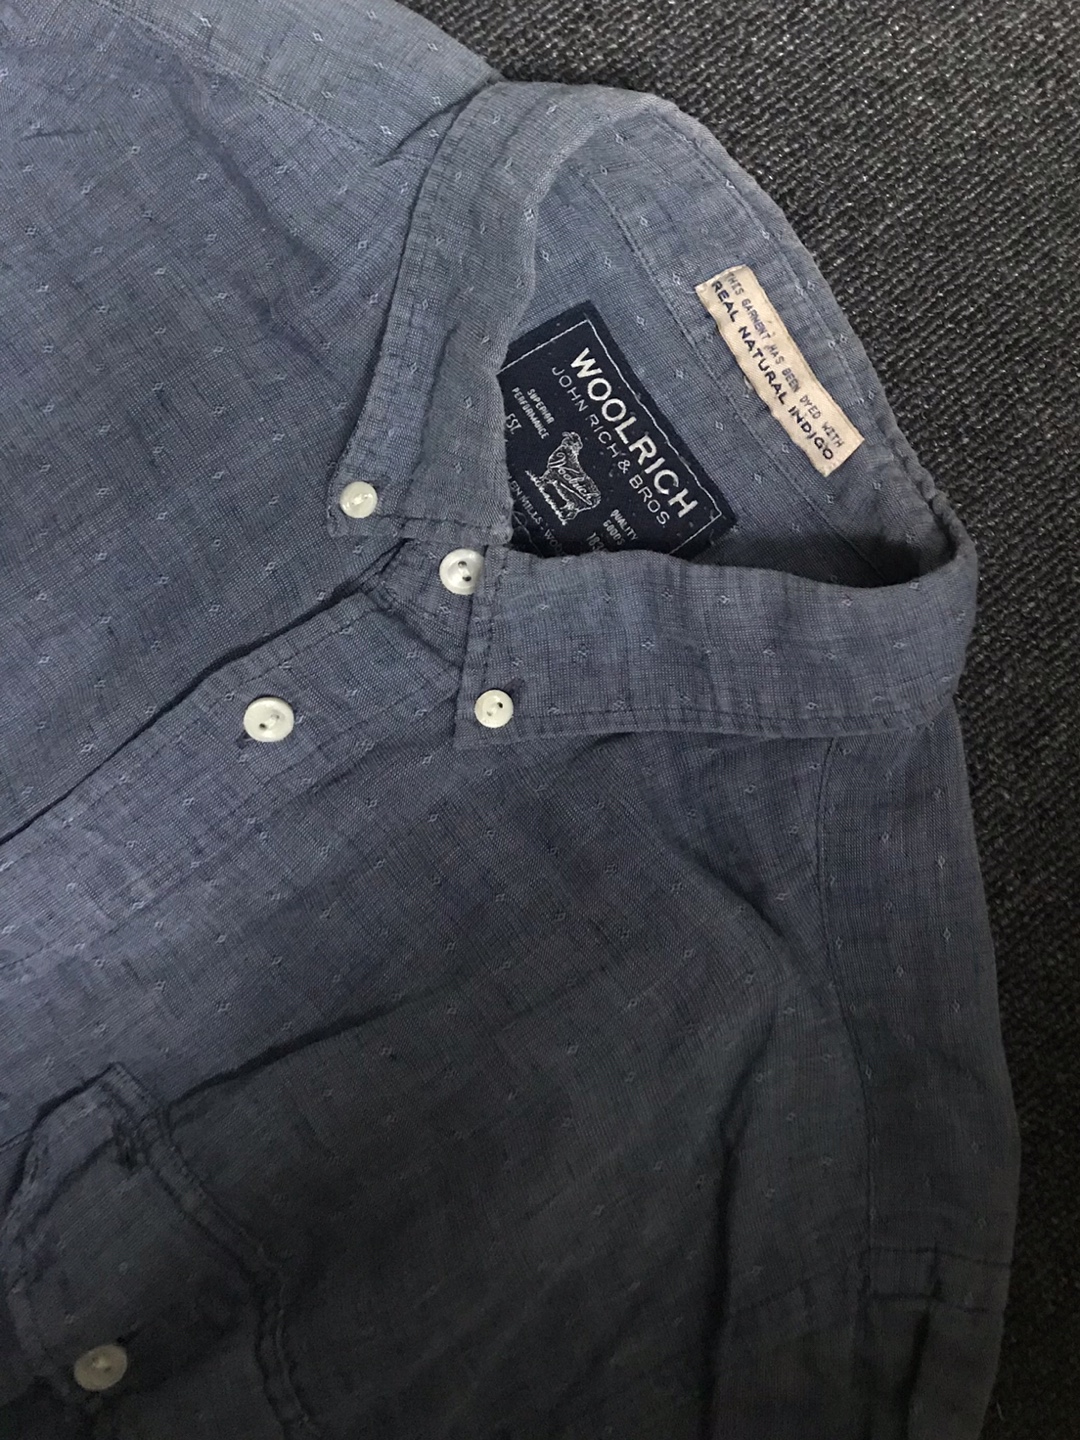 woolrich indigo cotton/linen pattern bd shirt (L size, ~100 추천)